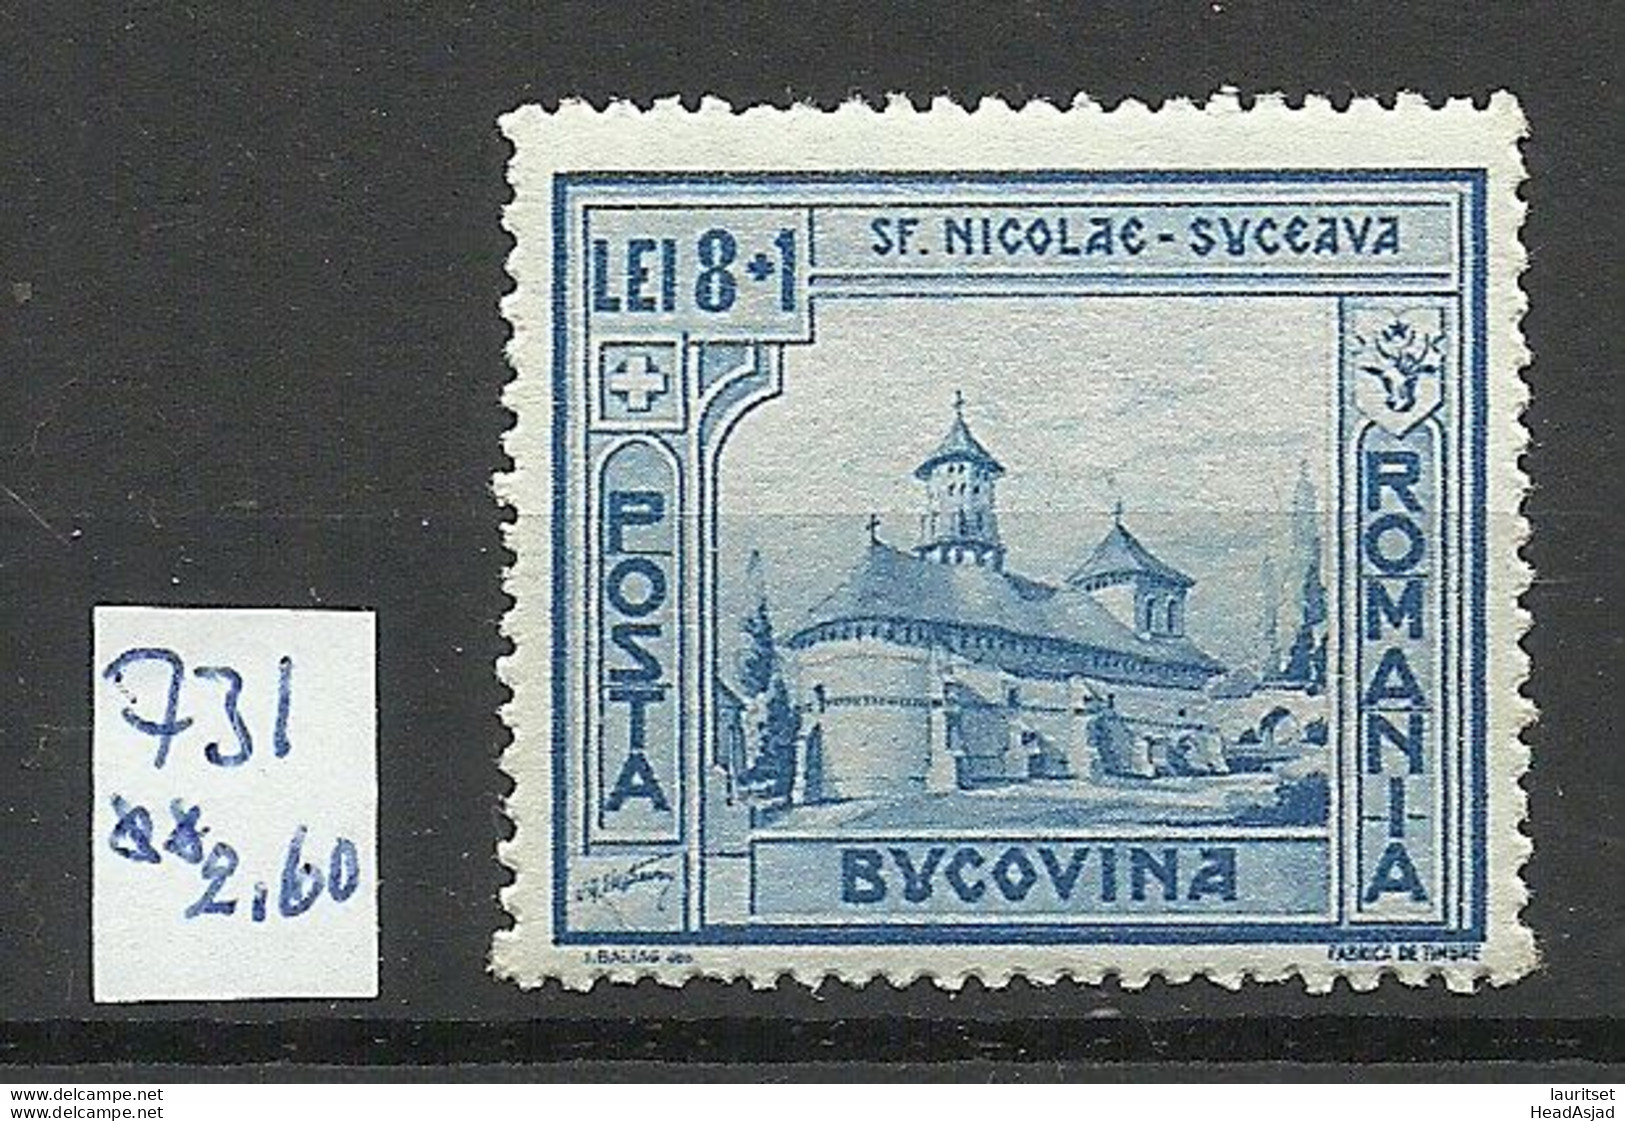 ROMANIA Rumänien 1941 Michel 738 Bucovina Arcitecture MNH - Ongebruikt